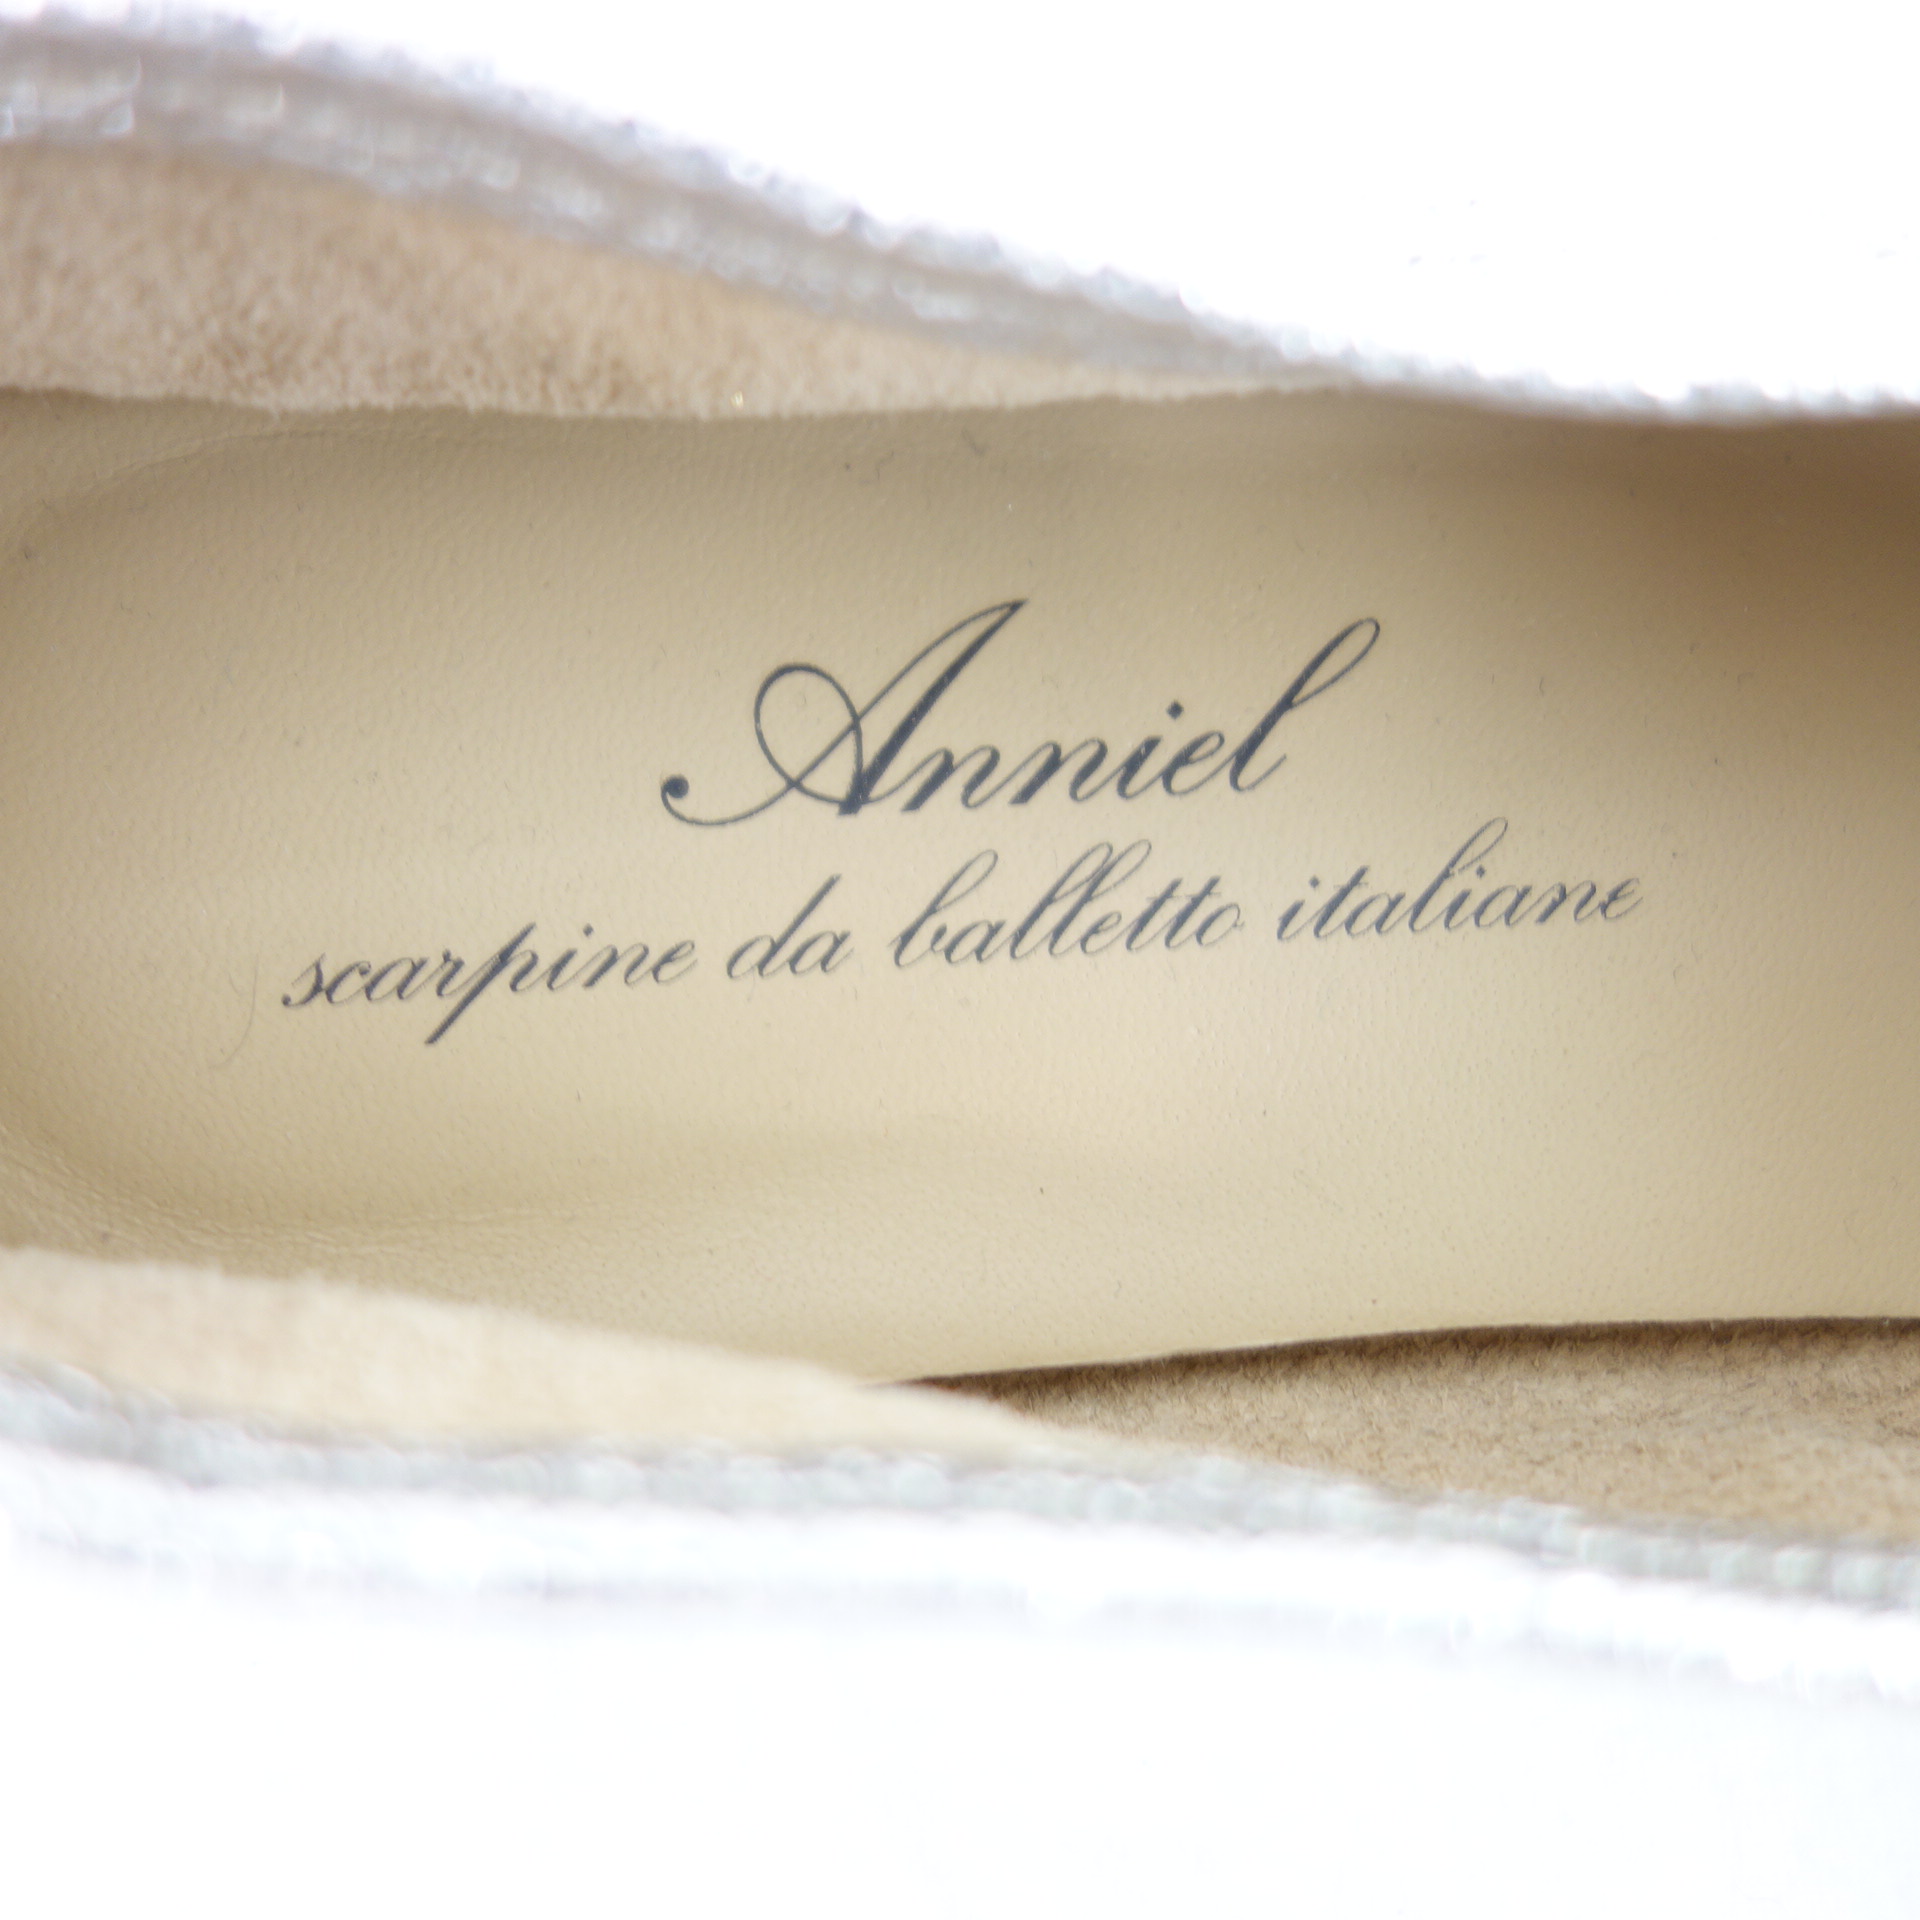 ANNIEL scarpine da balletto italiano Damen Schuhe Loafer Slipper Leder Silber 37